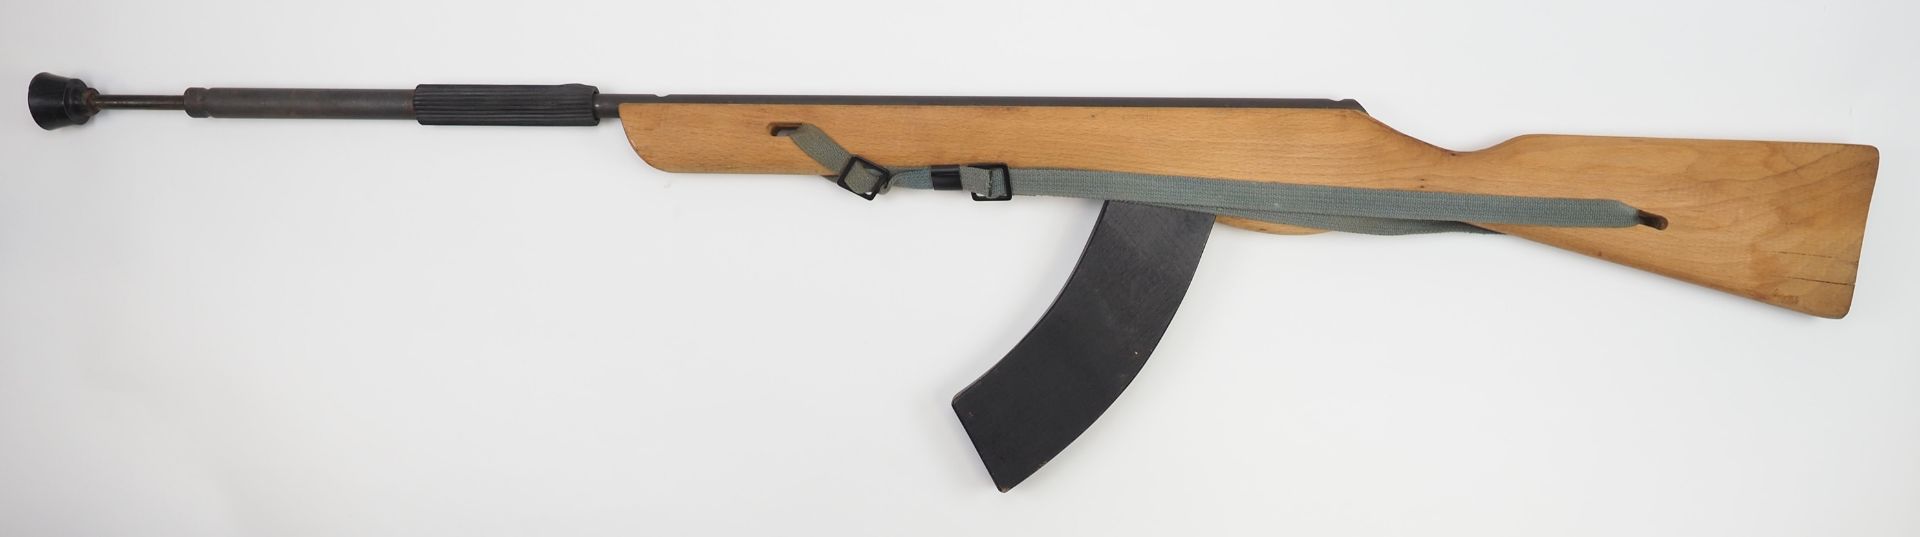 DDR: NVA AK 47 - Bajonettkampf Übungsgewehr. - Bild 2 aus 2